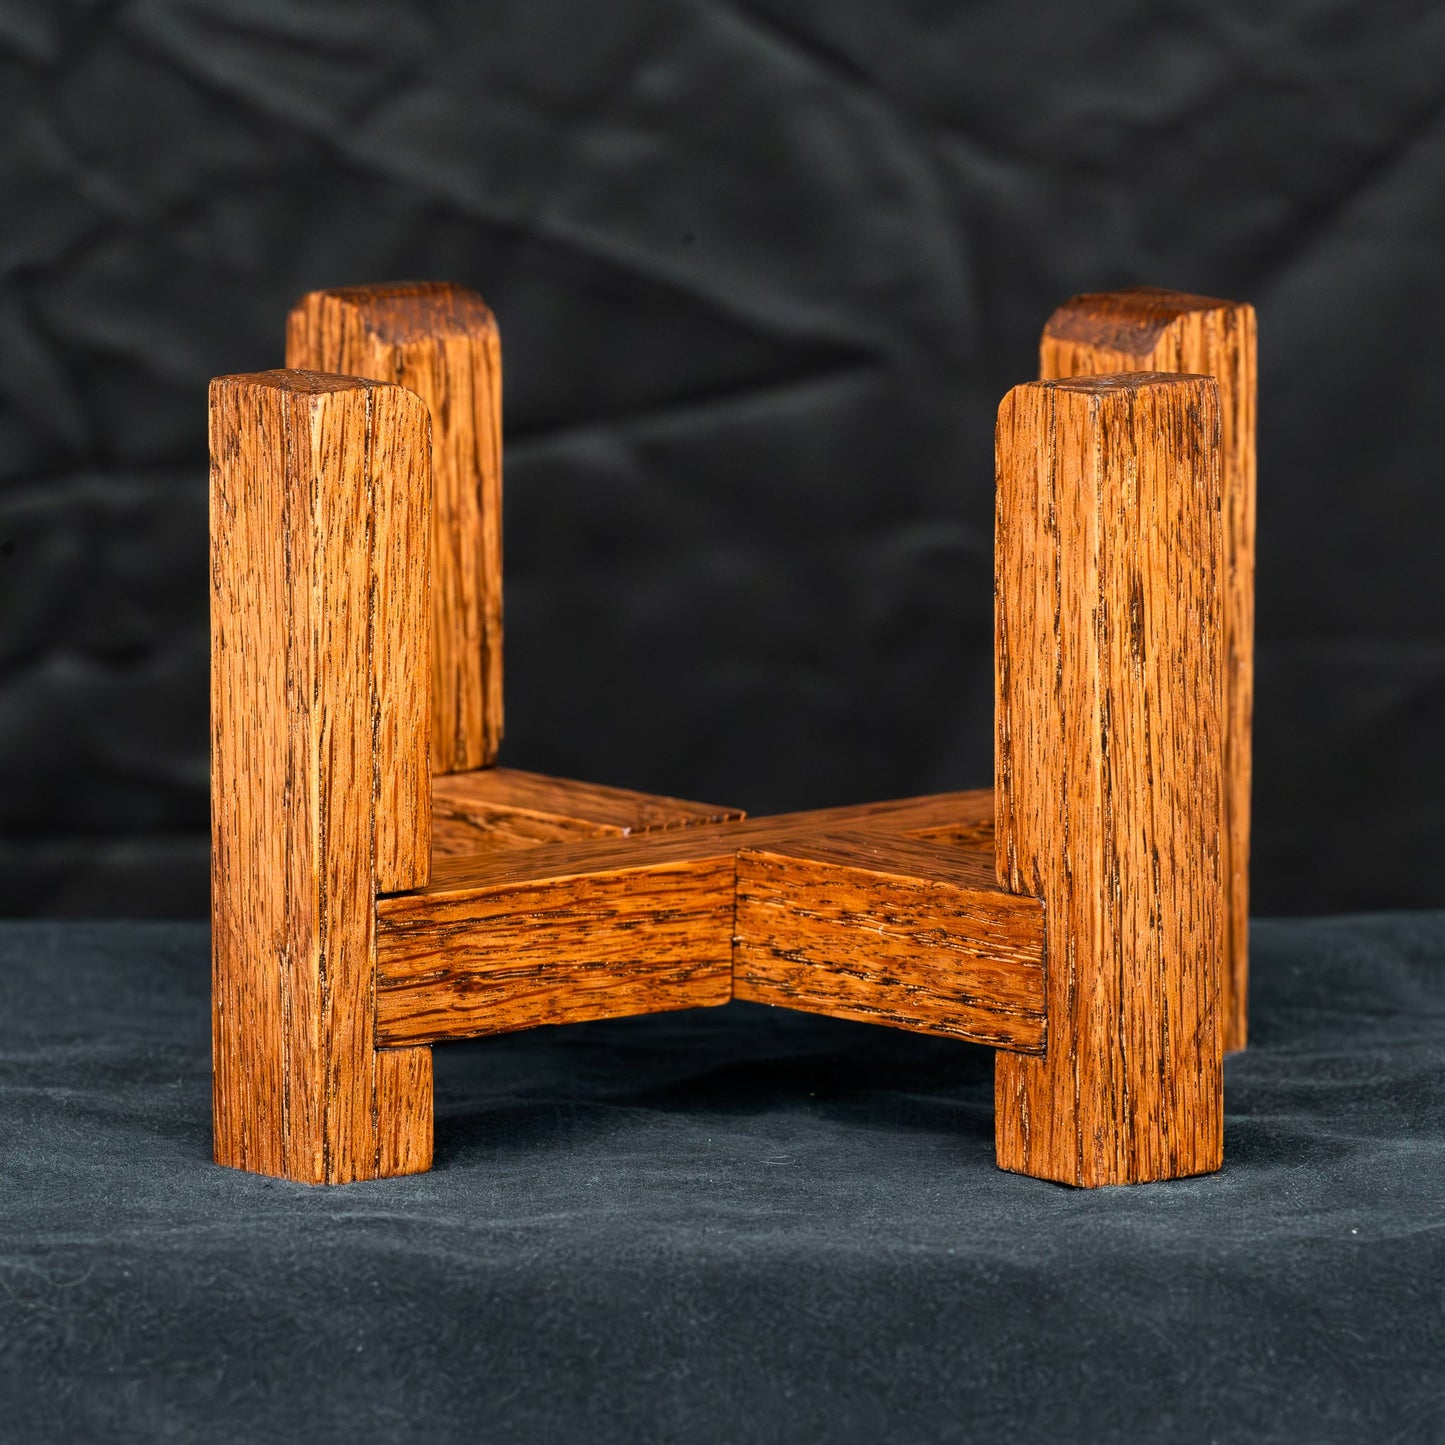 Handmade carved Red Oak wood coaster stand